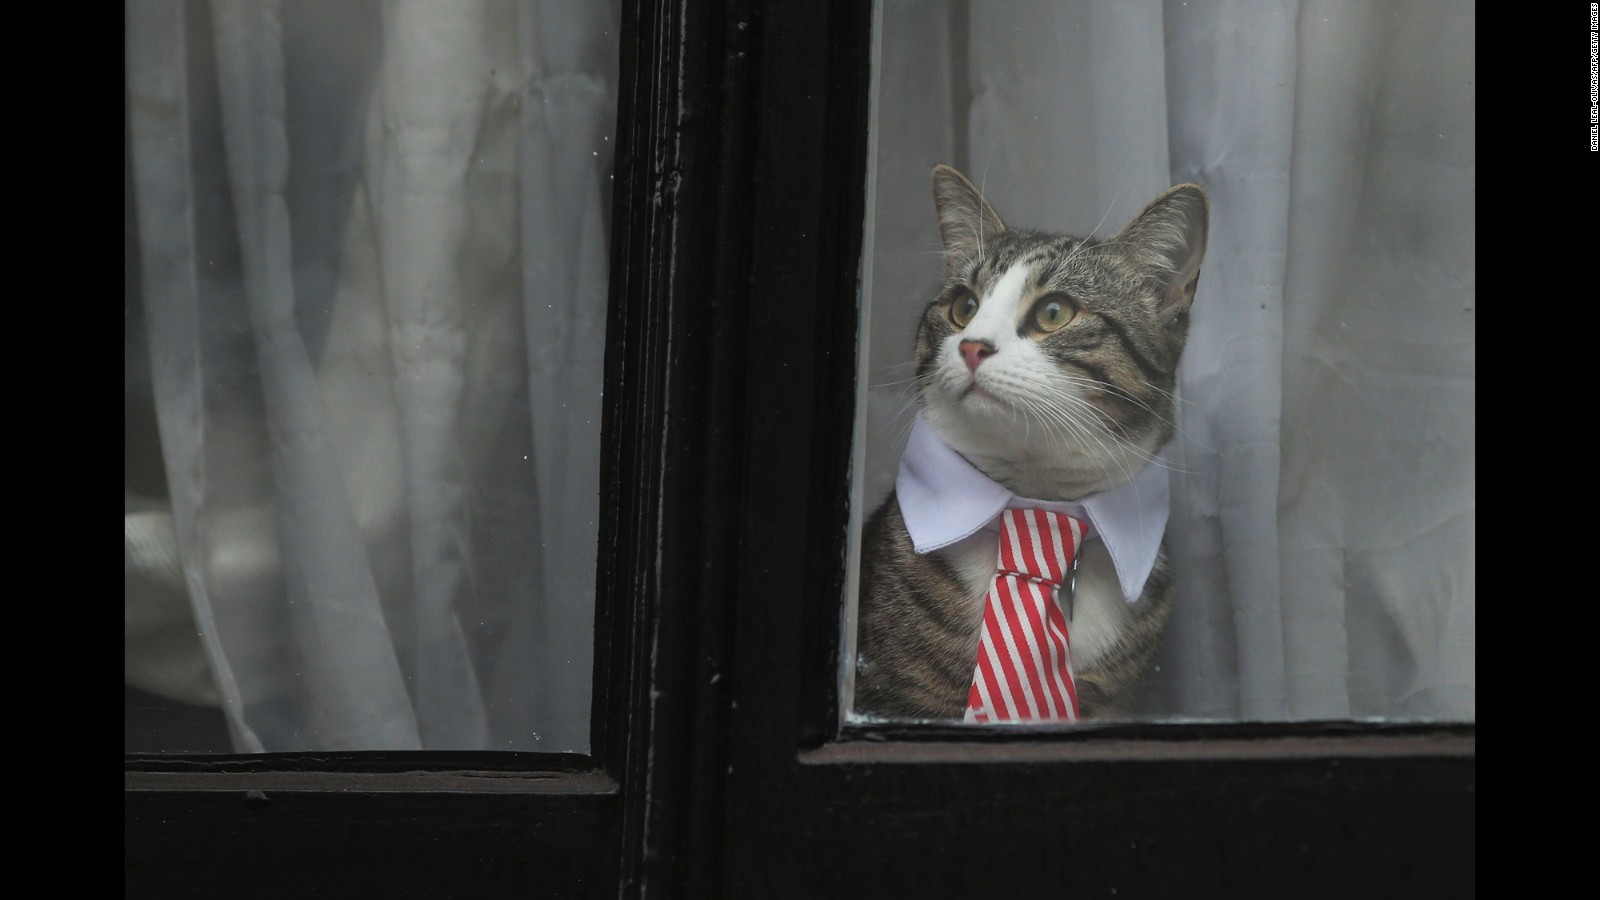 Assange cat: Whatever happened to Embassy Cat? - CNN